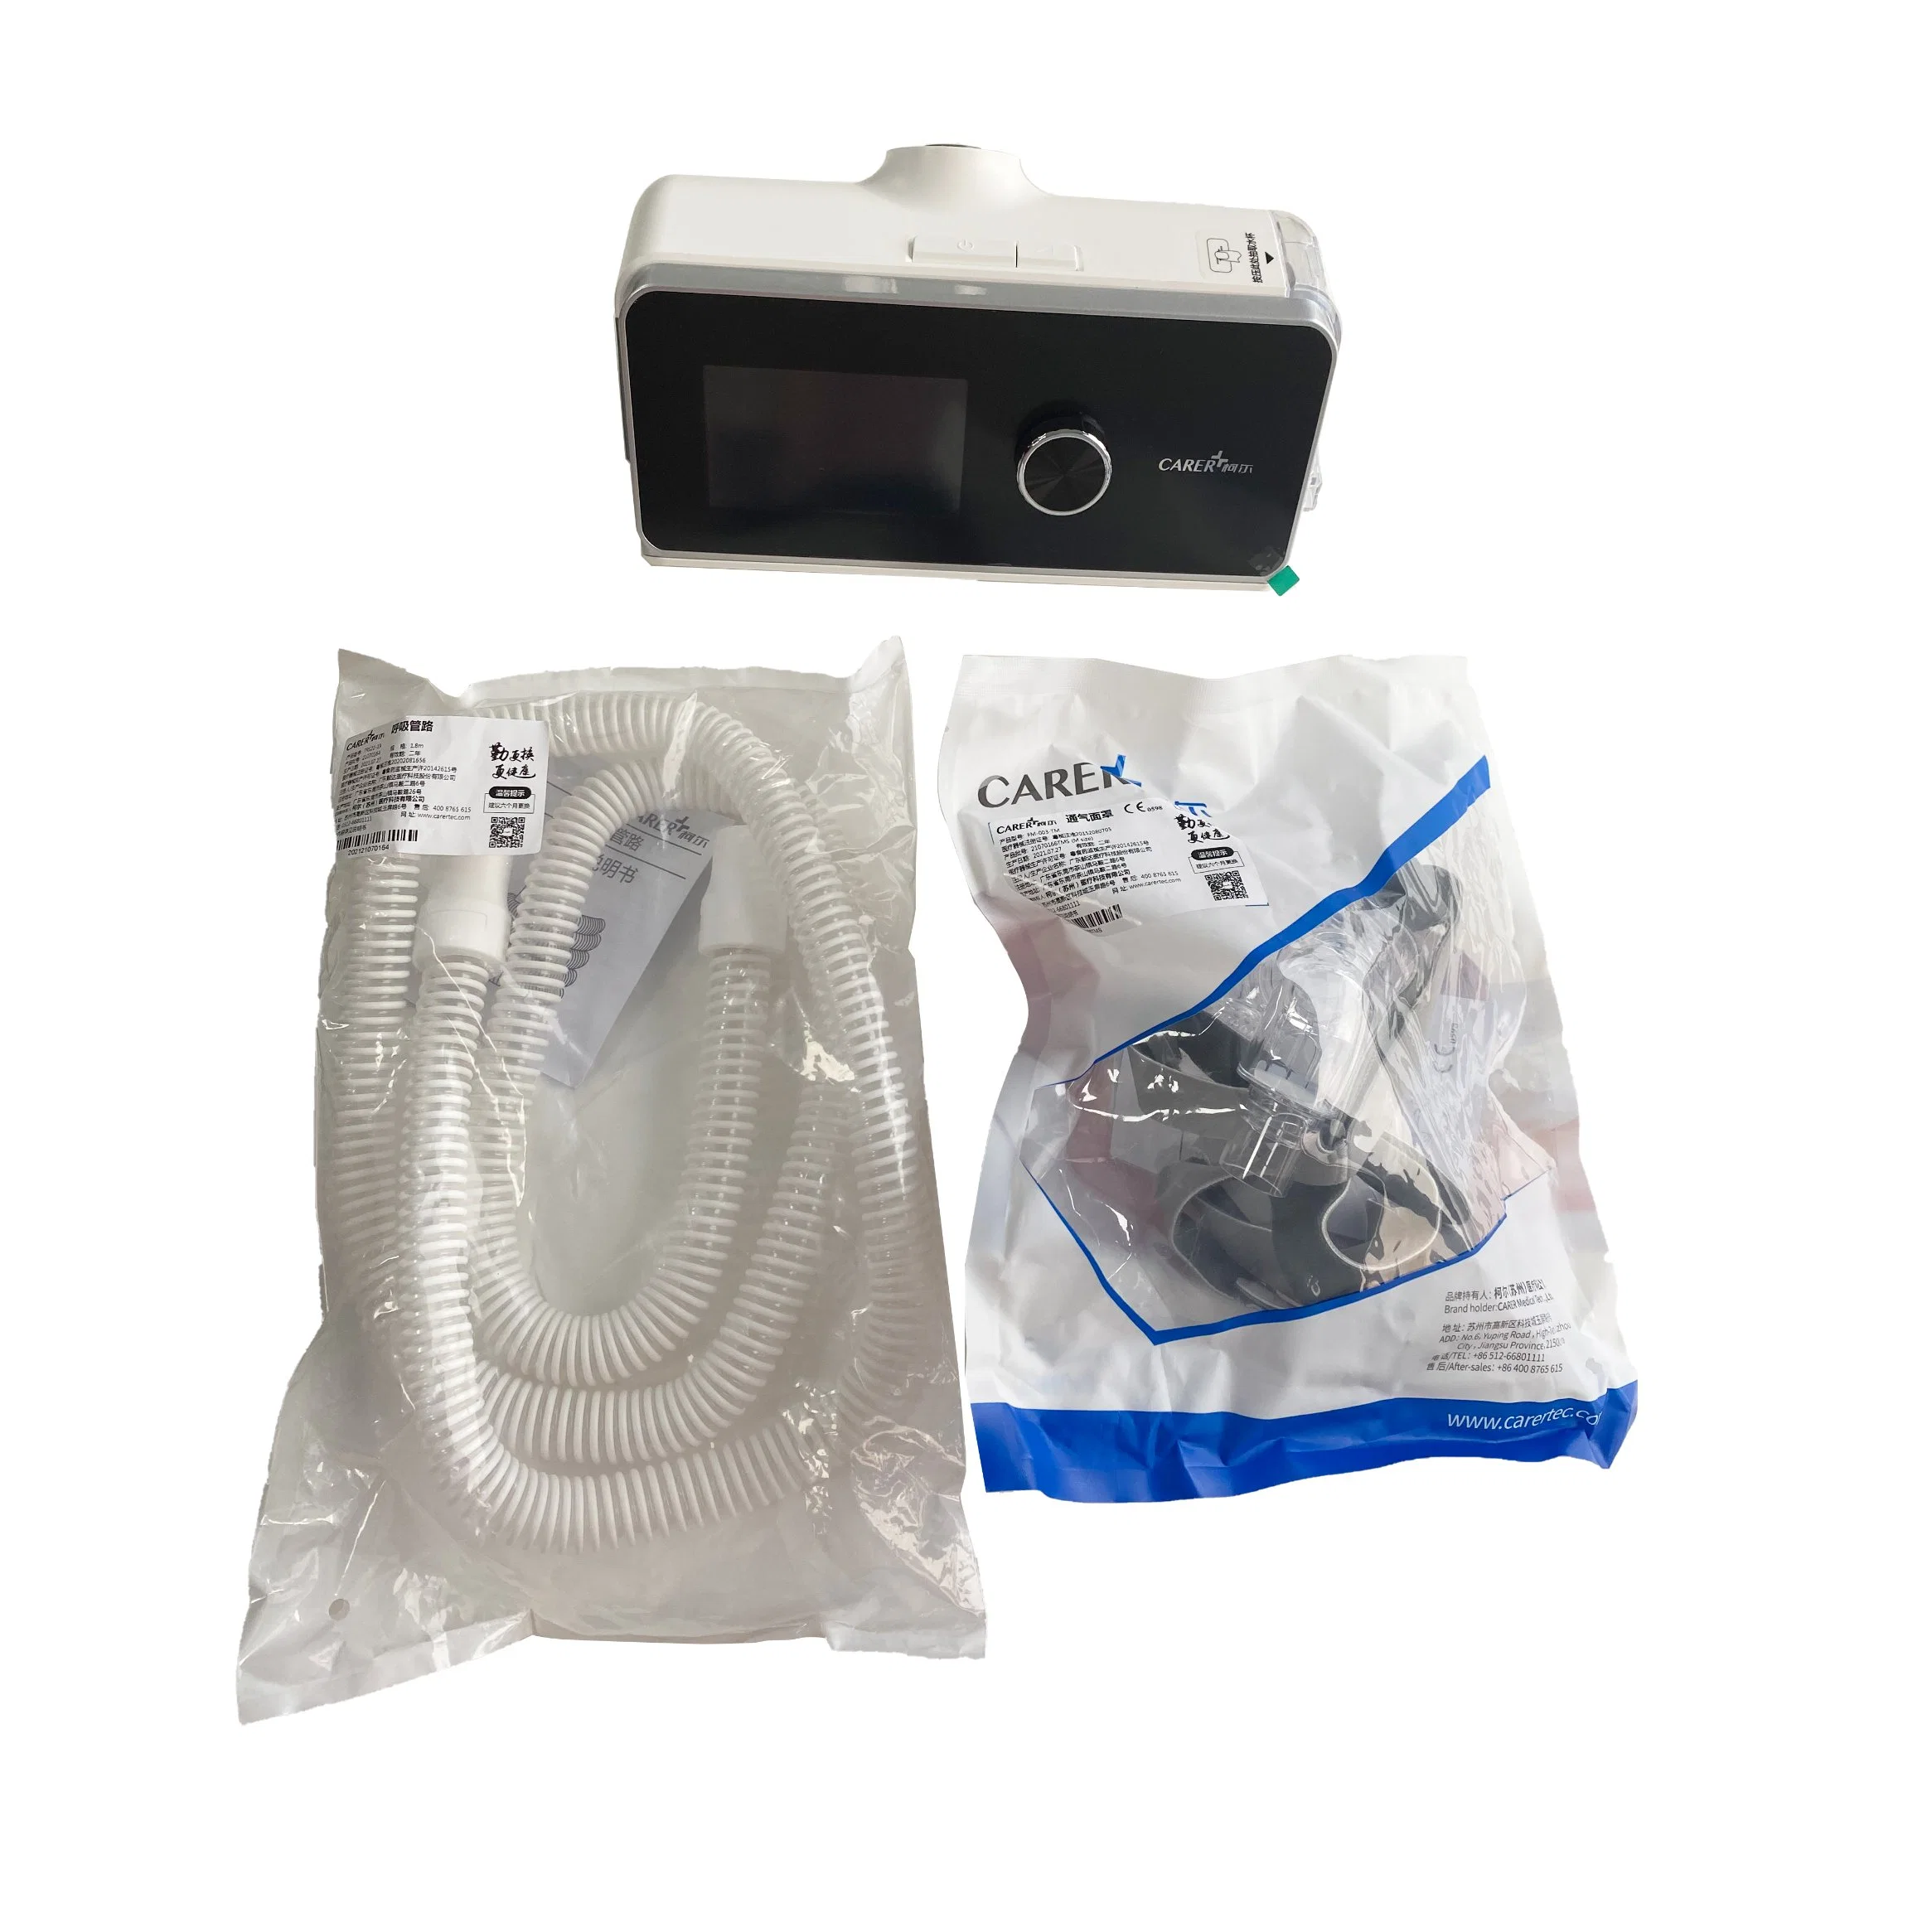 Medical Sleep Apnea Treatment Hfnc Portable CPAP Ventilator Sleep Apnea Auto CPAP